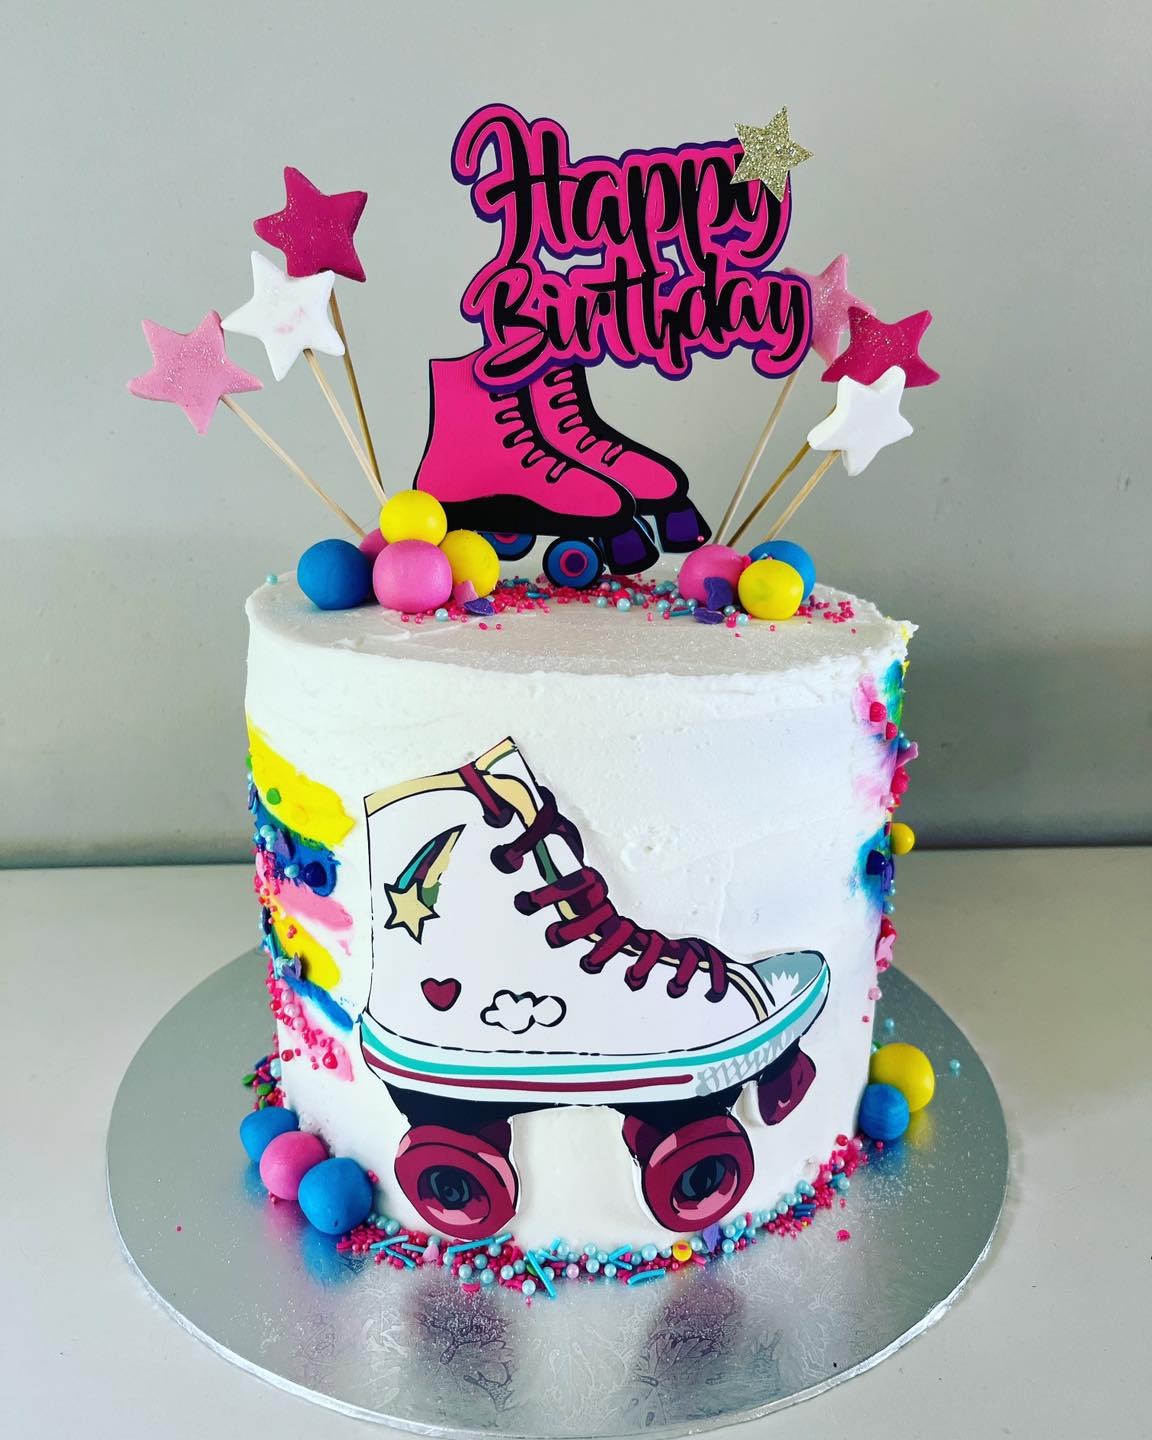 Roller skate cake , cake, cake bakers, cake baker near me, instacake, cakes of instagram, cape town cakes, novelty cakes, birthday cakes, southern peninsula cakes, cake decorating